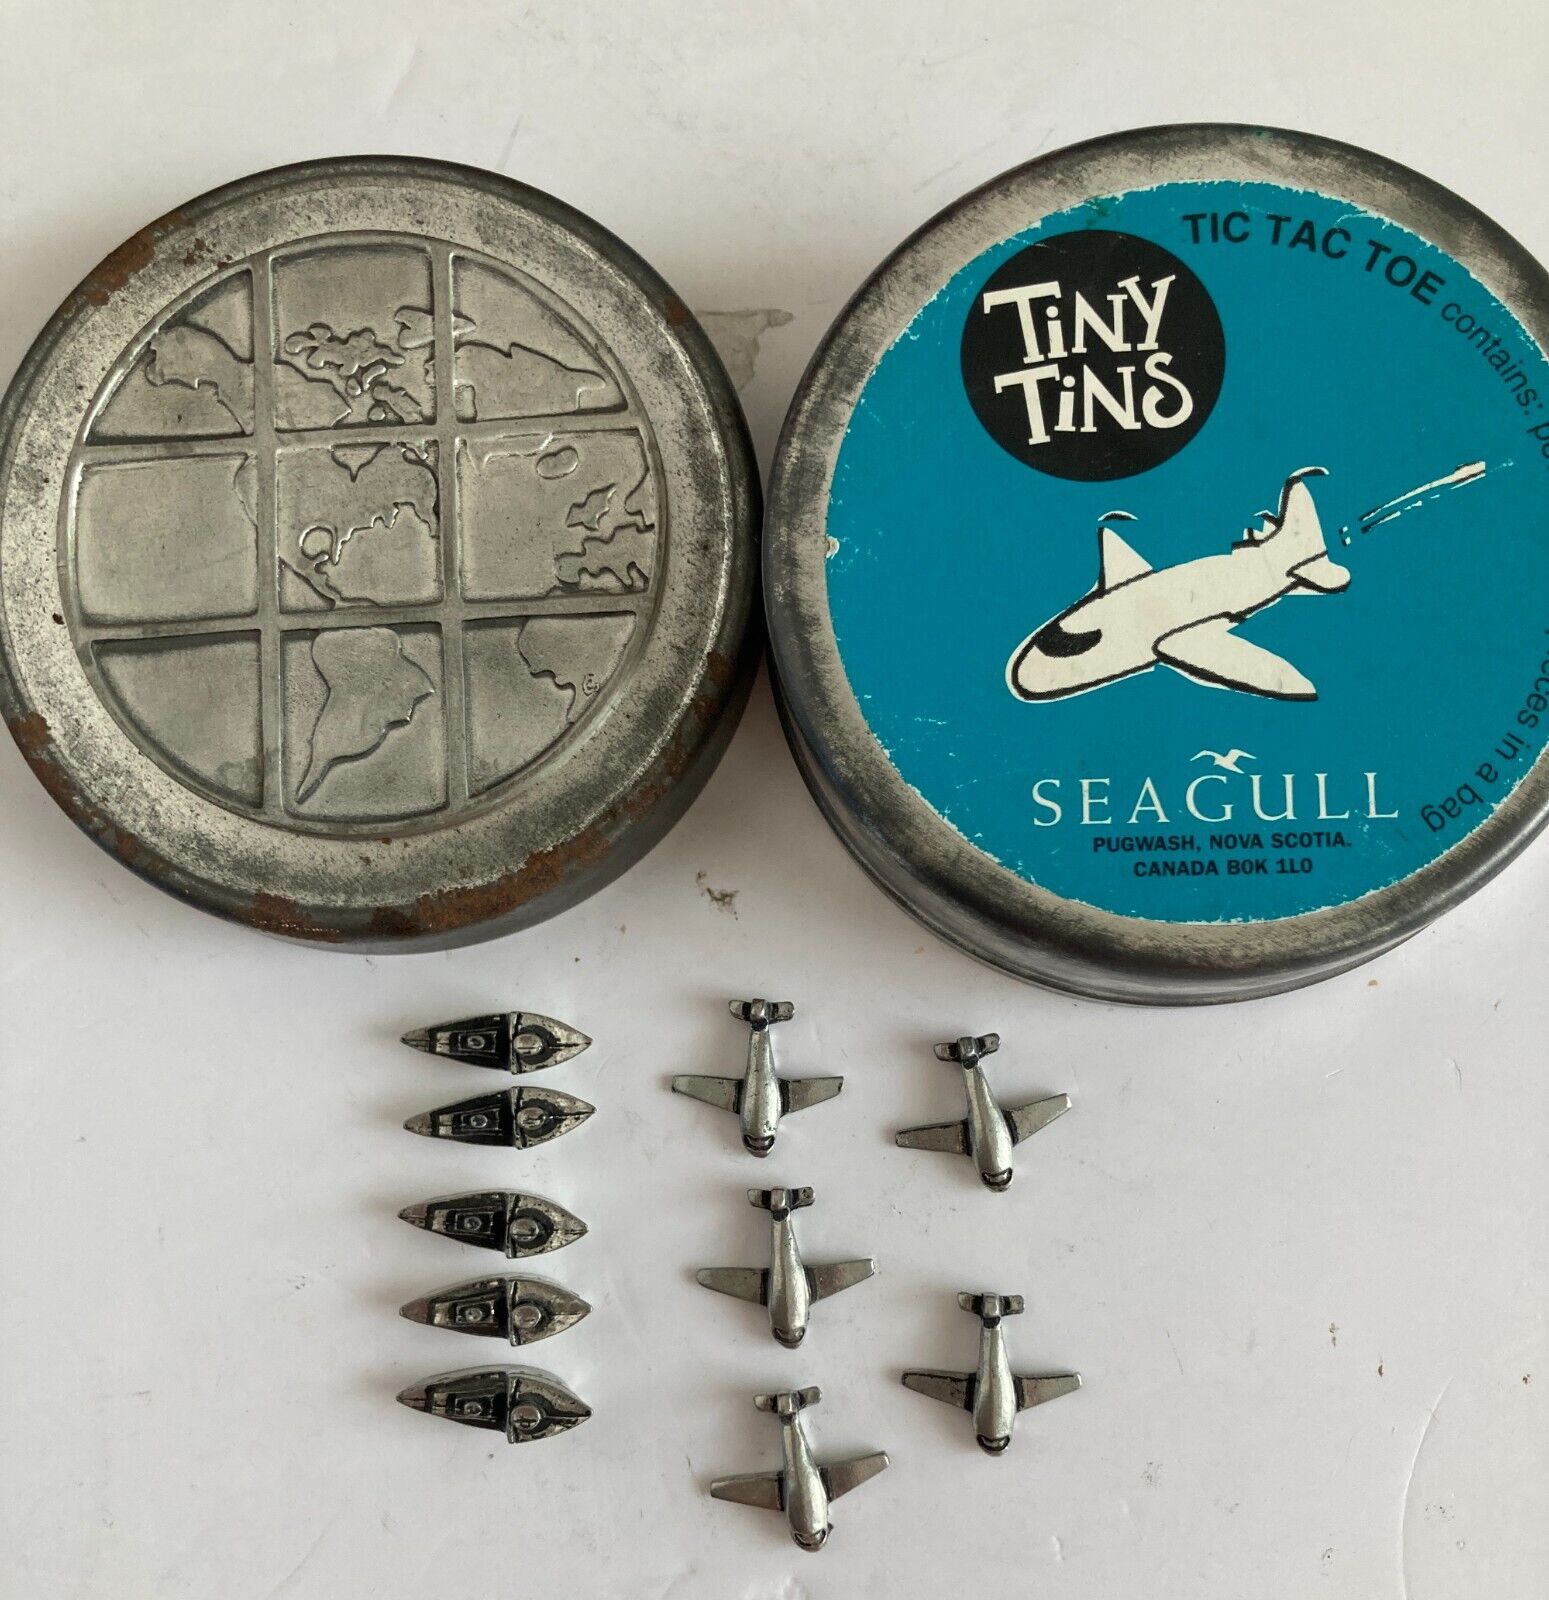 Vintage • Seagull, Pugwash, Nova Scotia • Tiny Tins • Pewter Tic Tac Toe